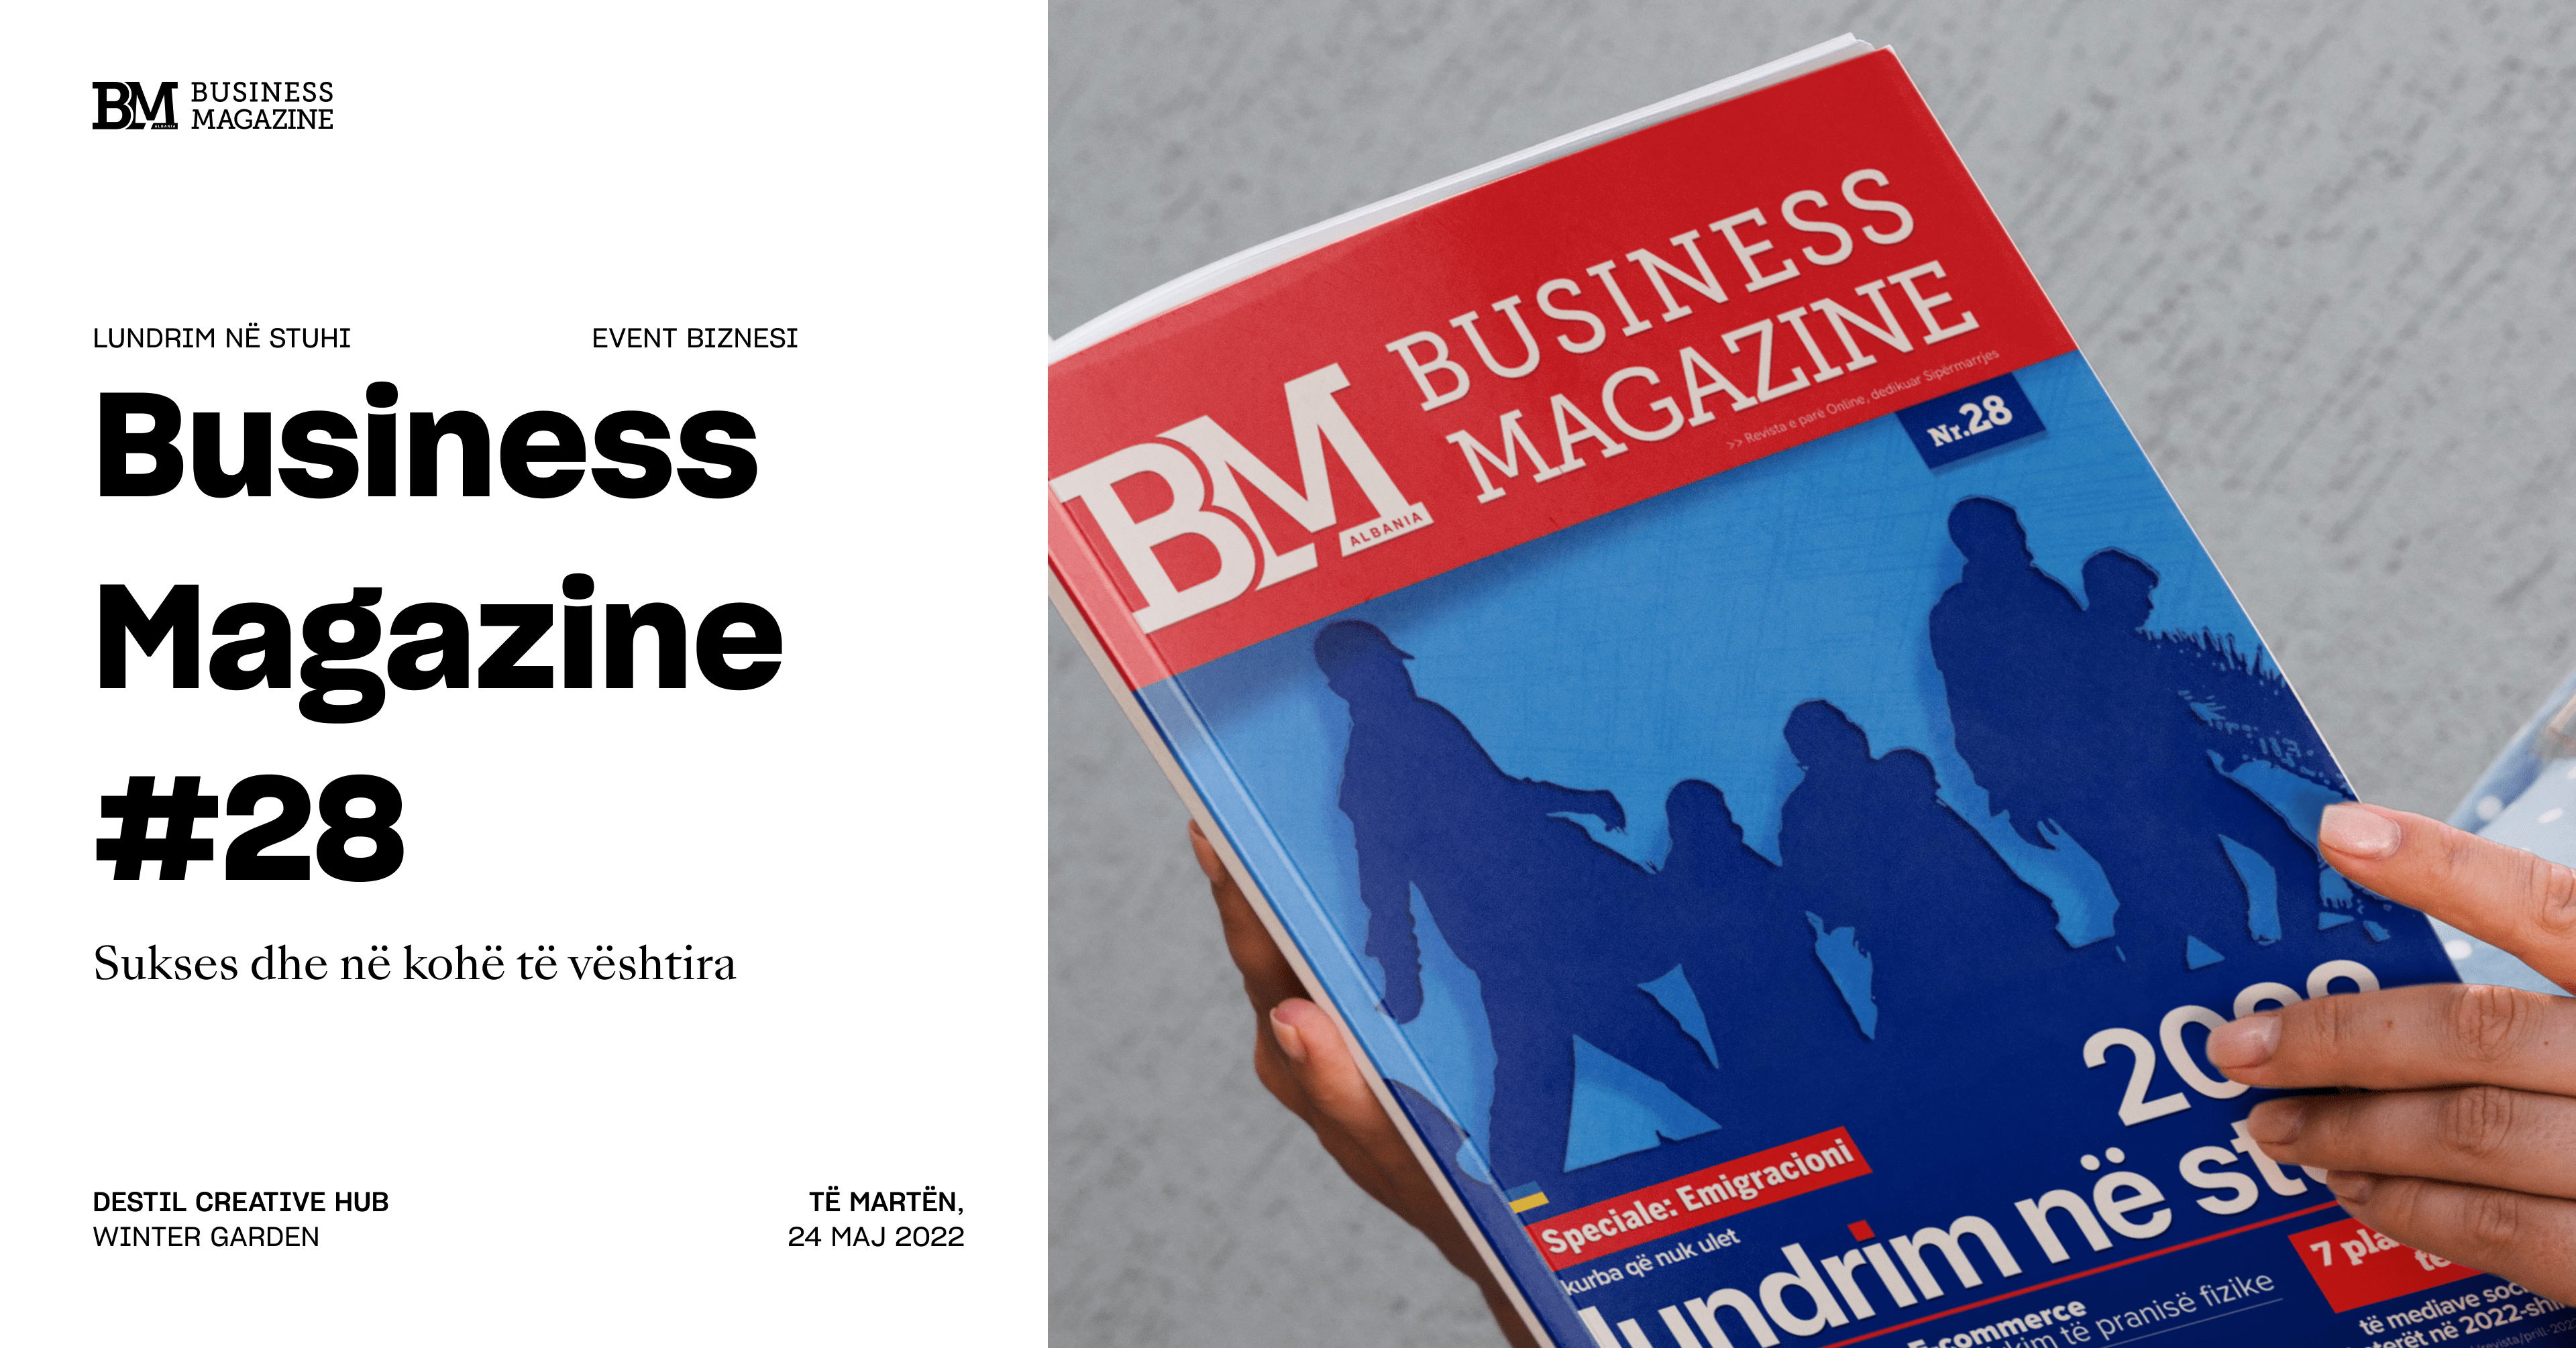 Business magazine Event